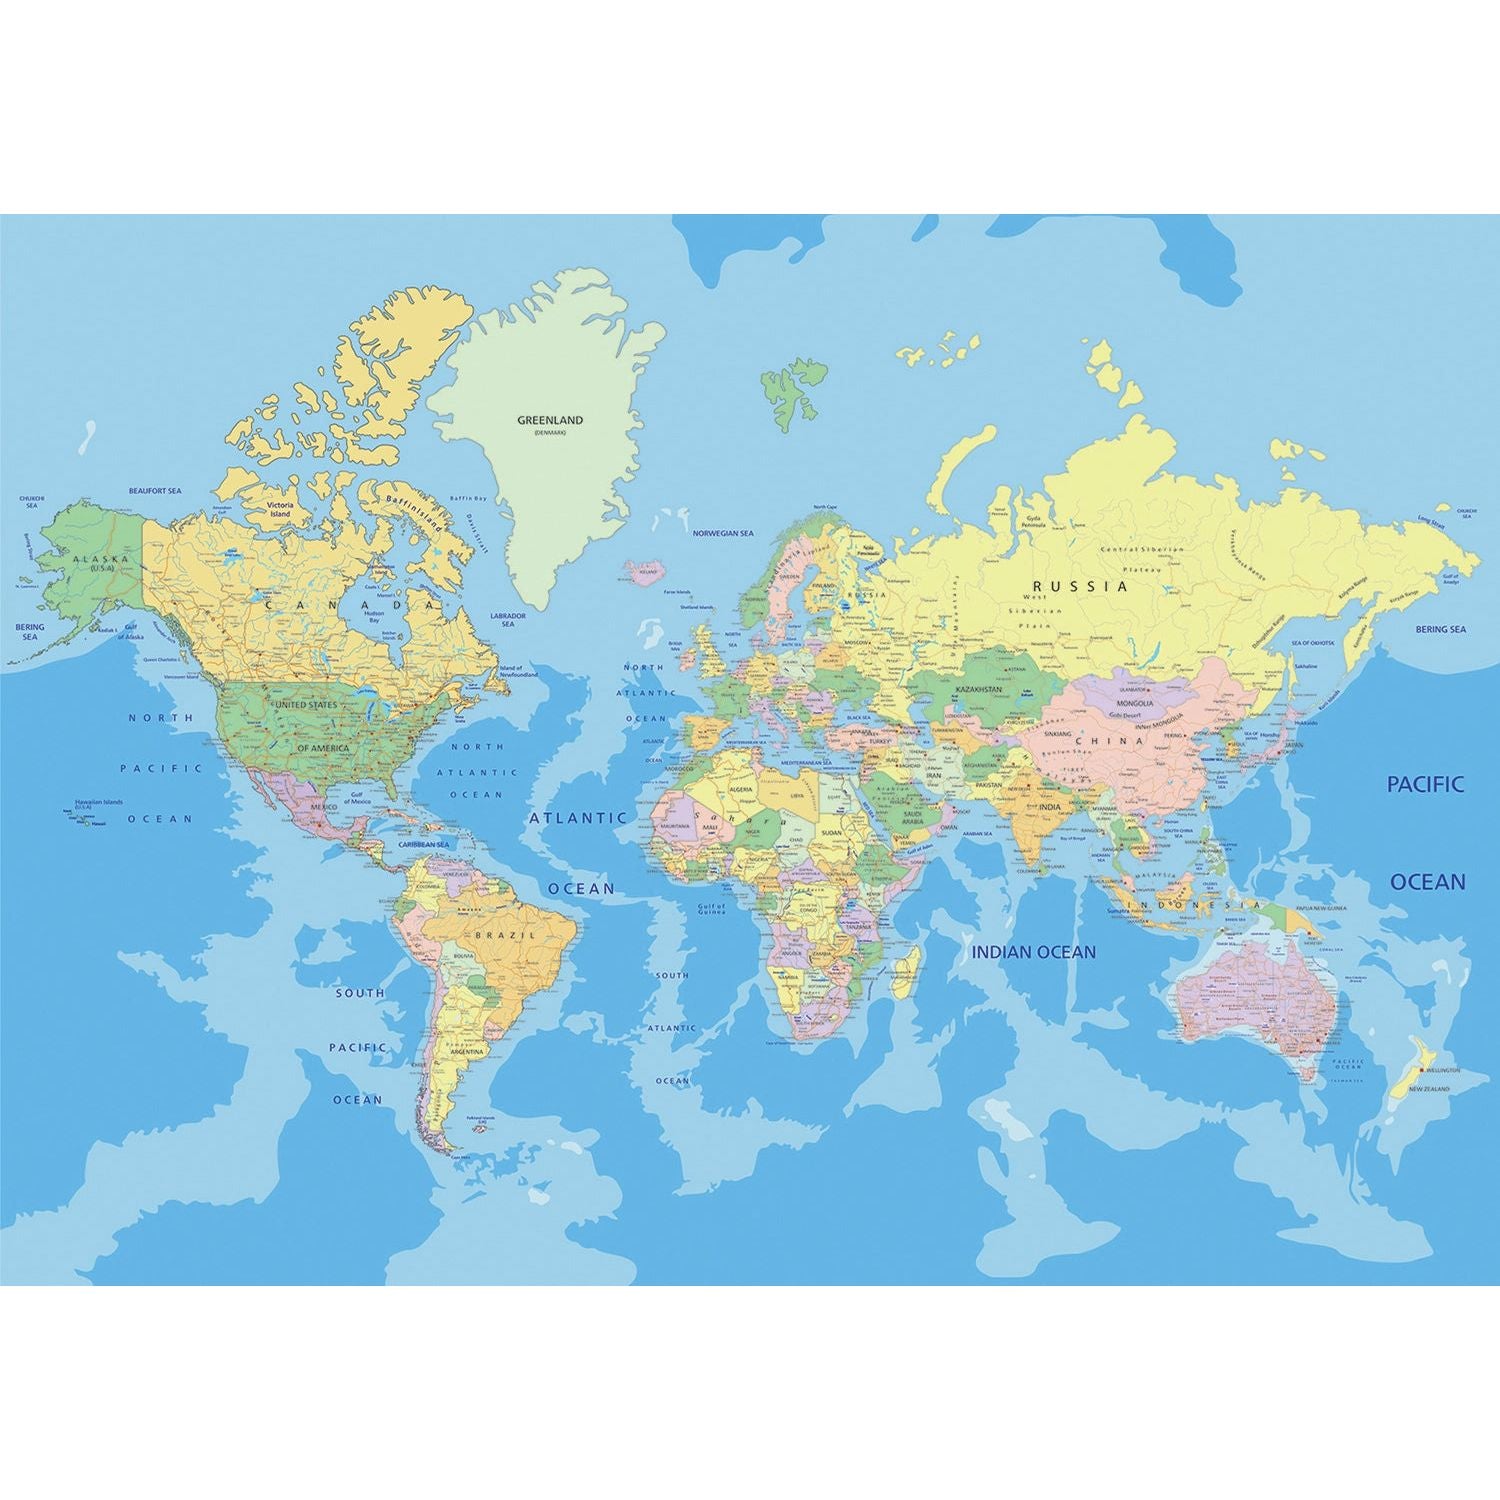 Cartographer's Delight: Vibrant World Map Wall Mural